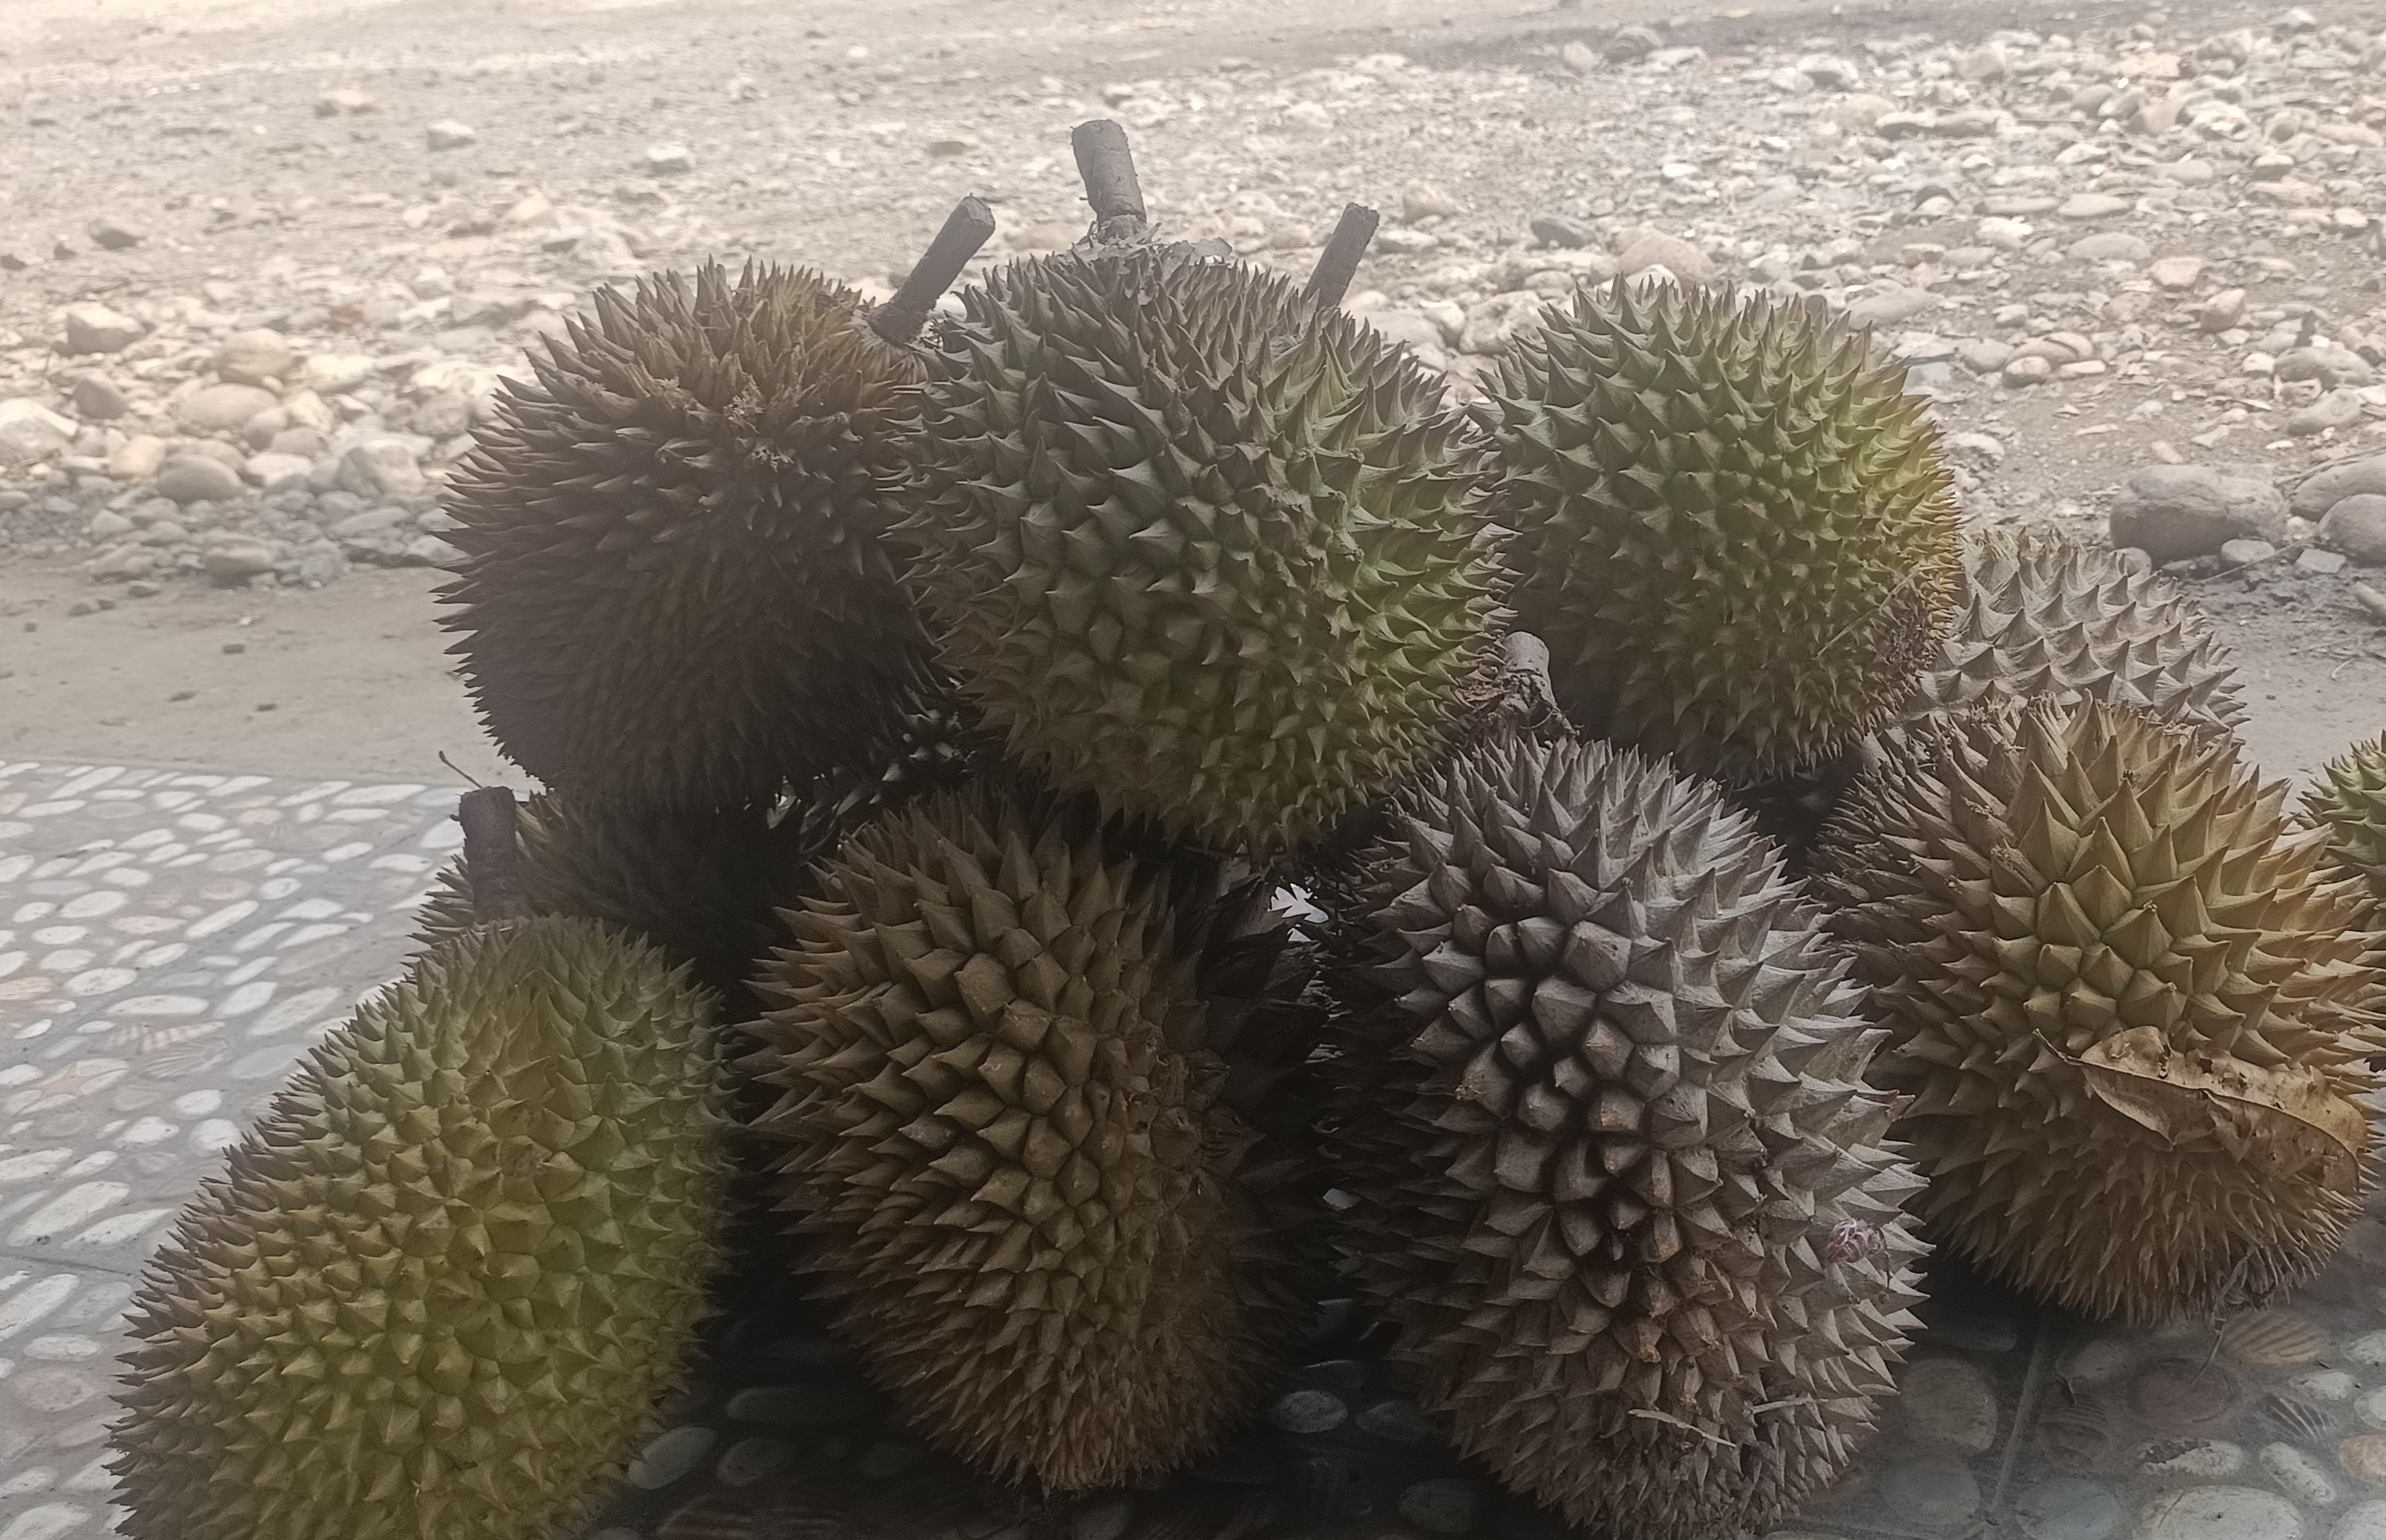 Musim Durian Seluma, Harga Terjangkau, Besar atau Kecil Harga Sama Rp 15.000 Rupiah! 